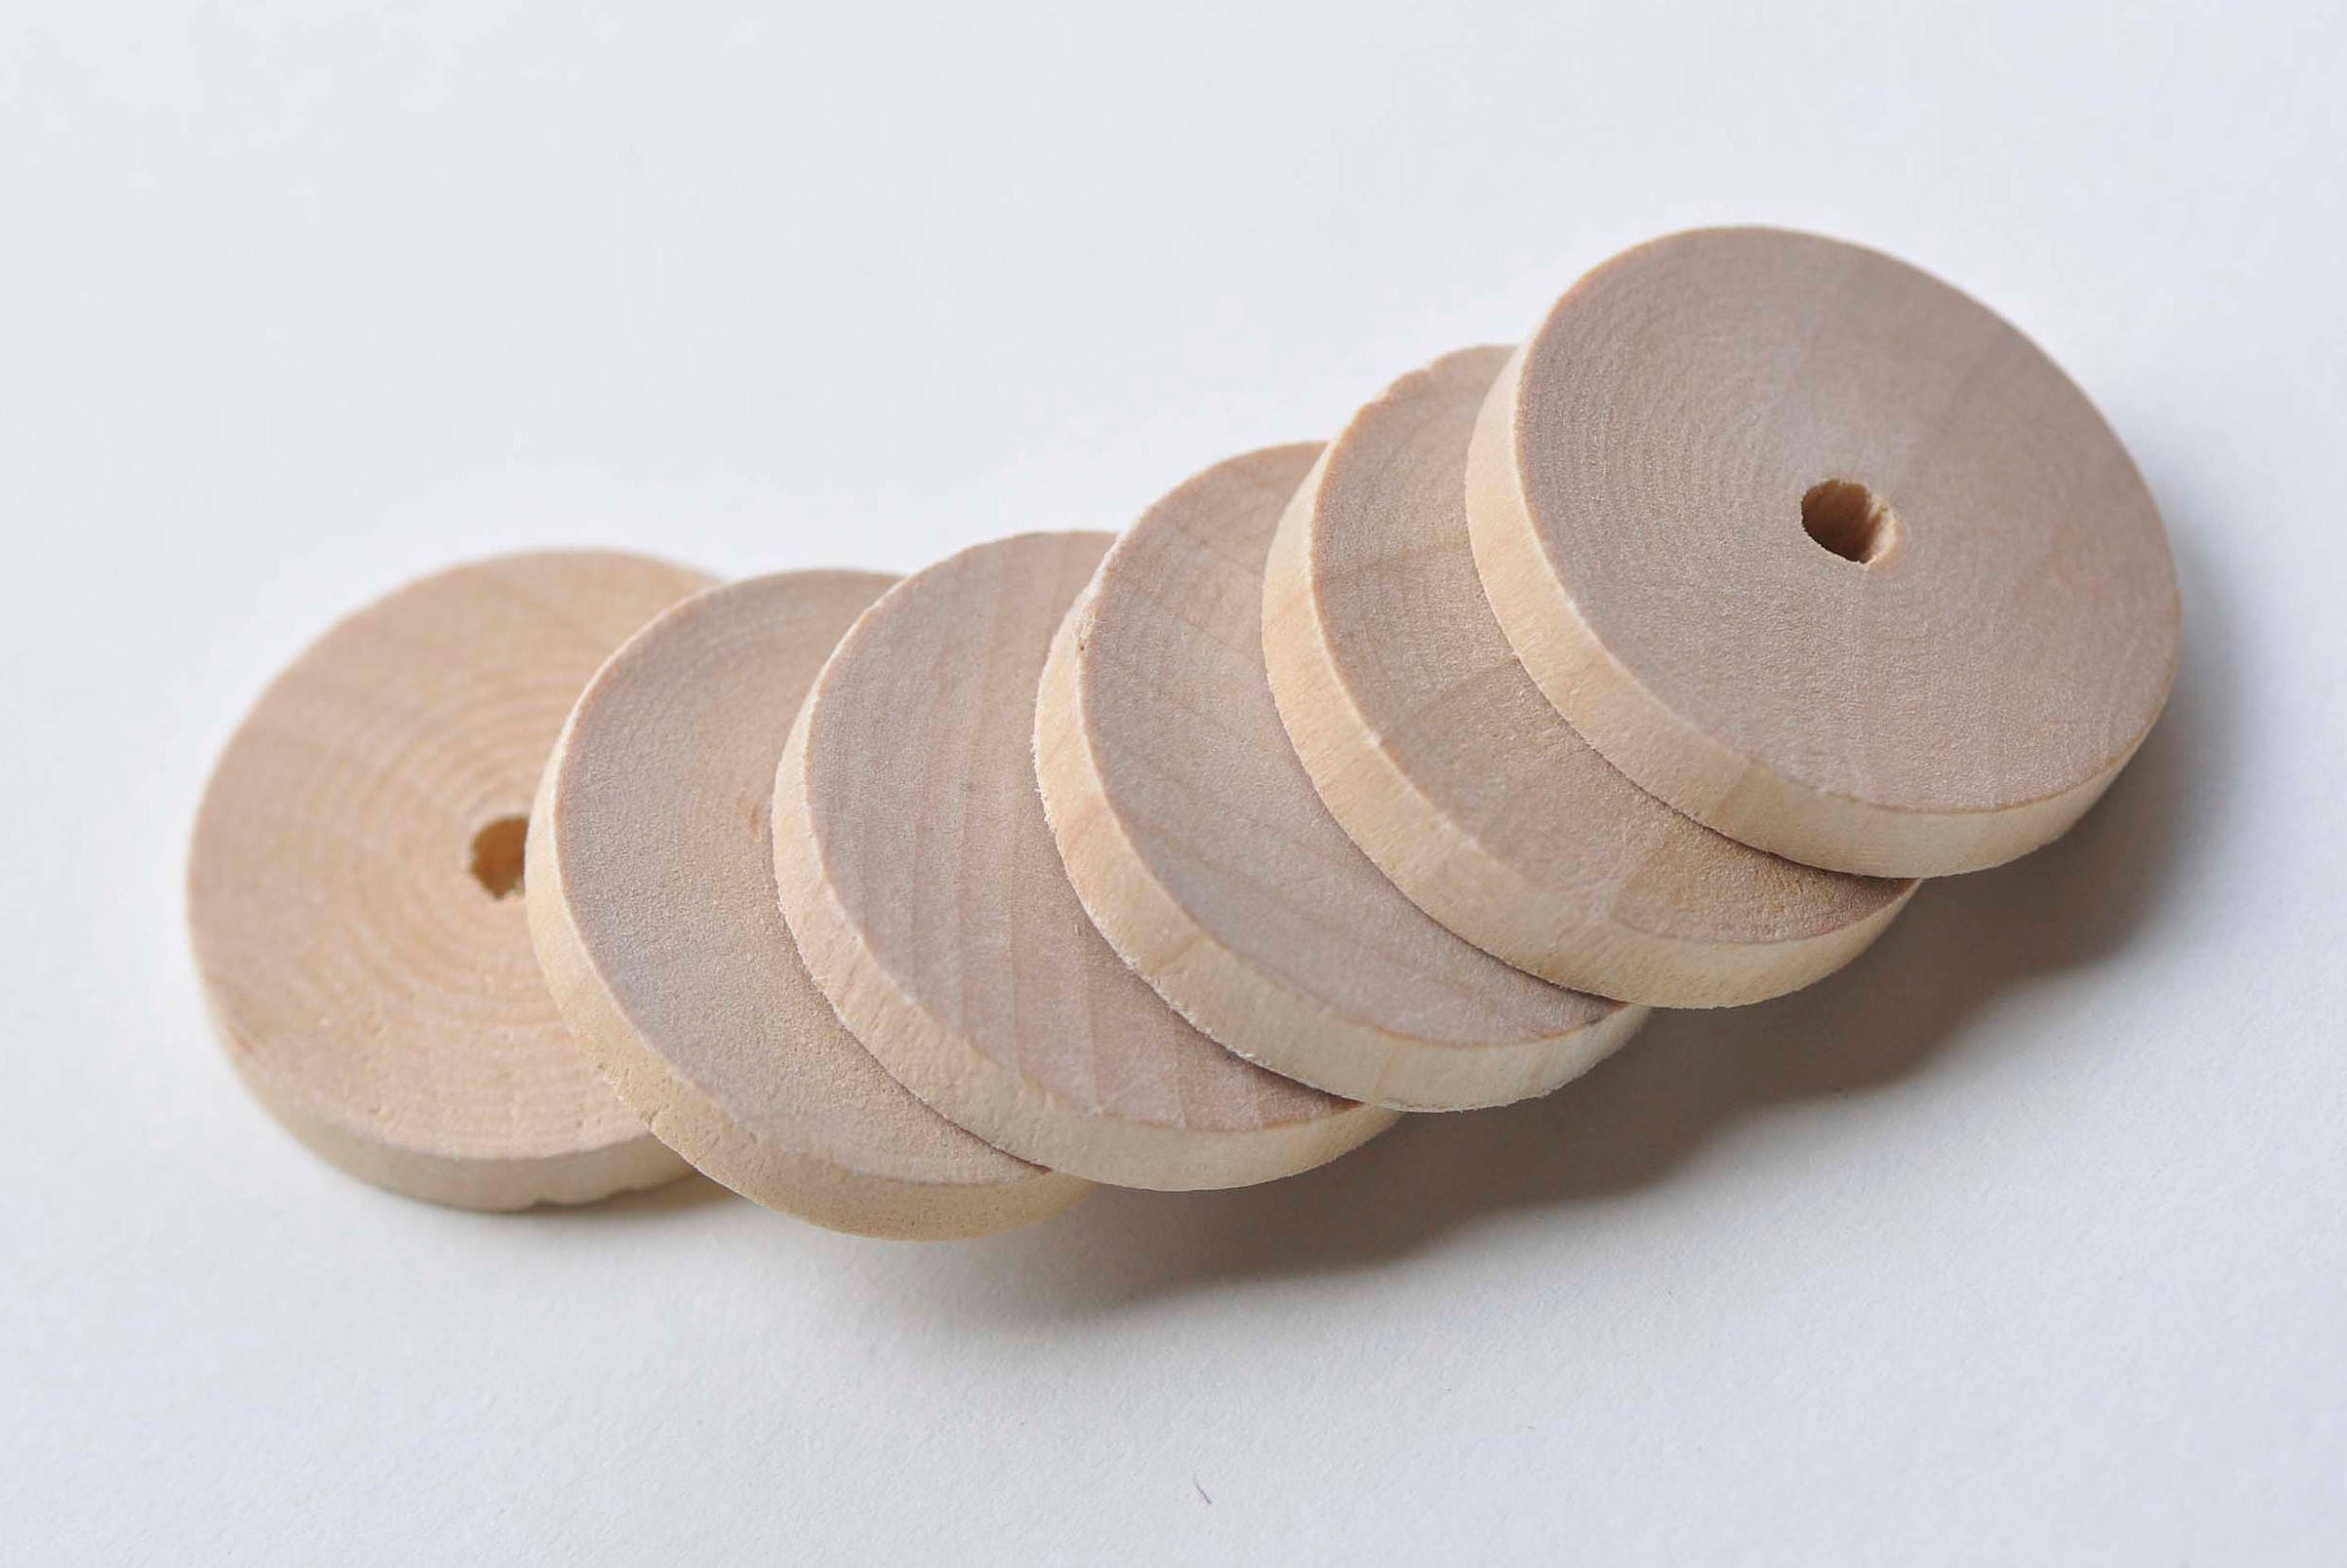 100 Pcs 3 Inch Wood Circles for Crafts Unfinished Wood Circles Natural –  WoodArtSupply